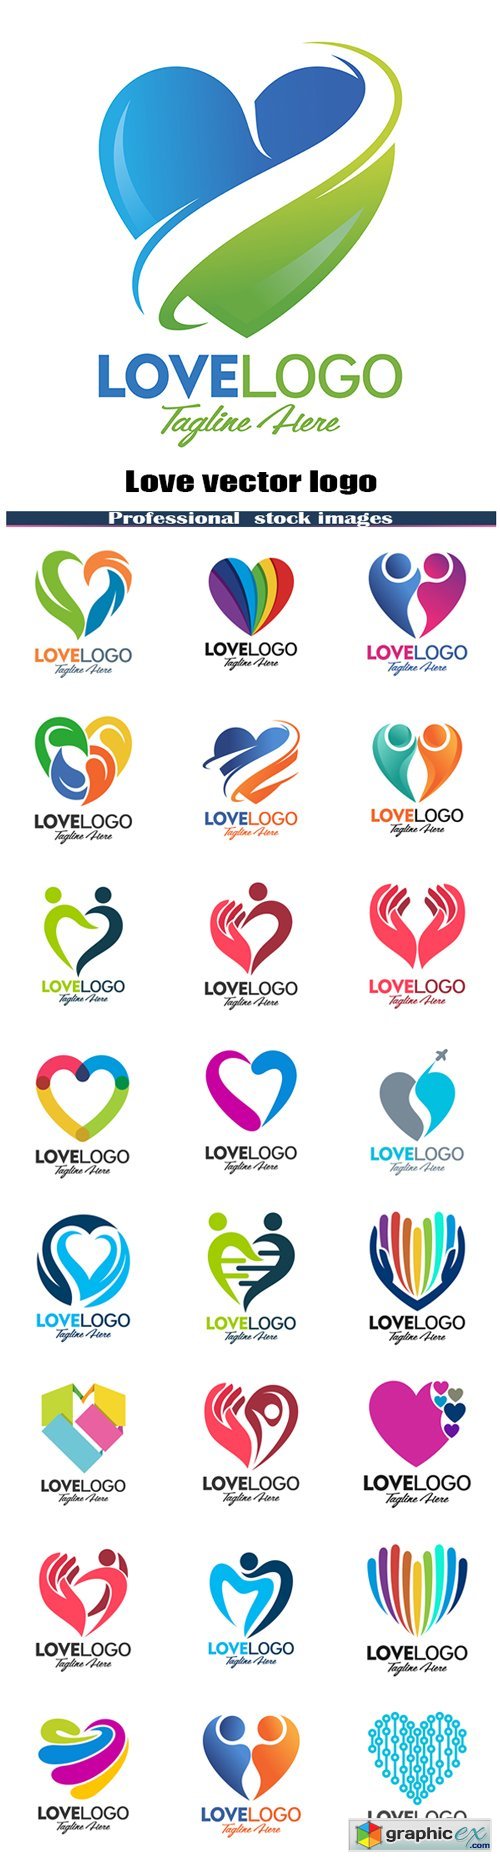 Love vector logo